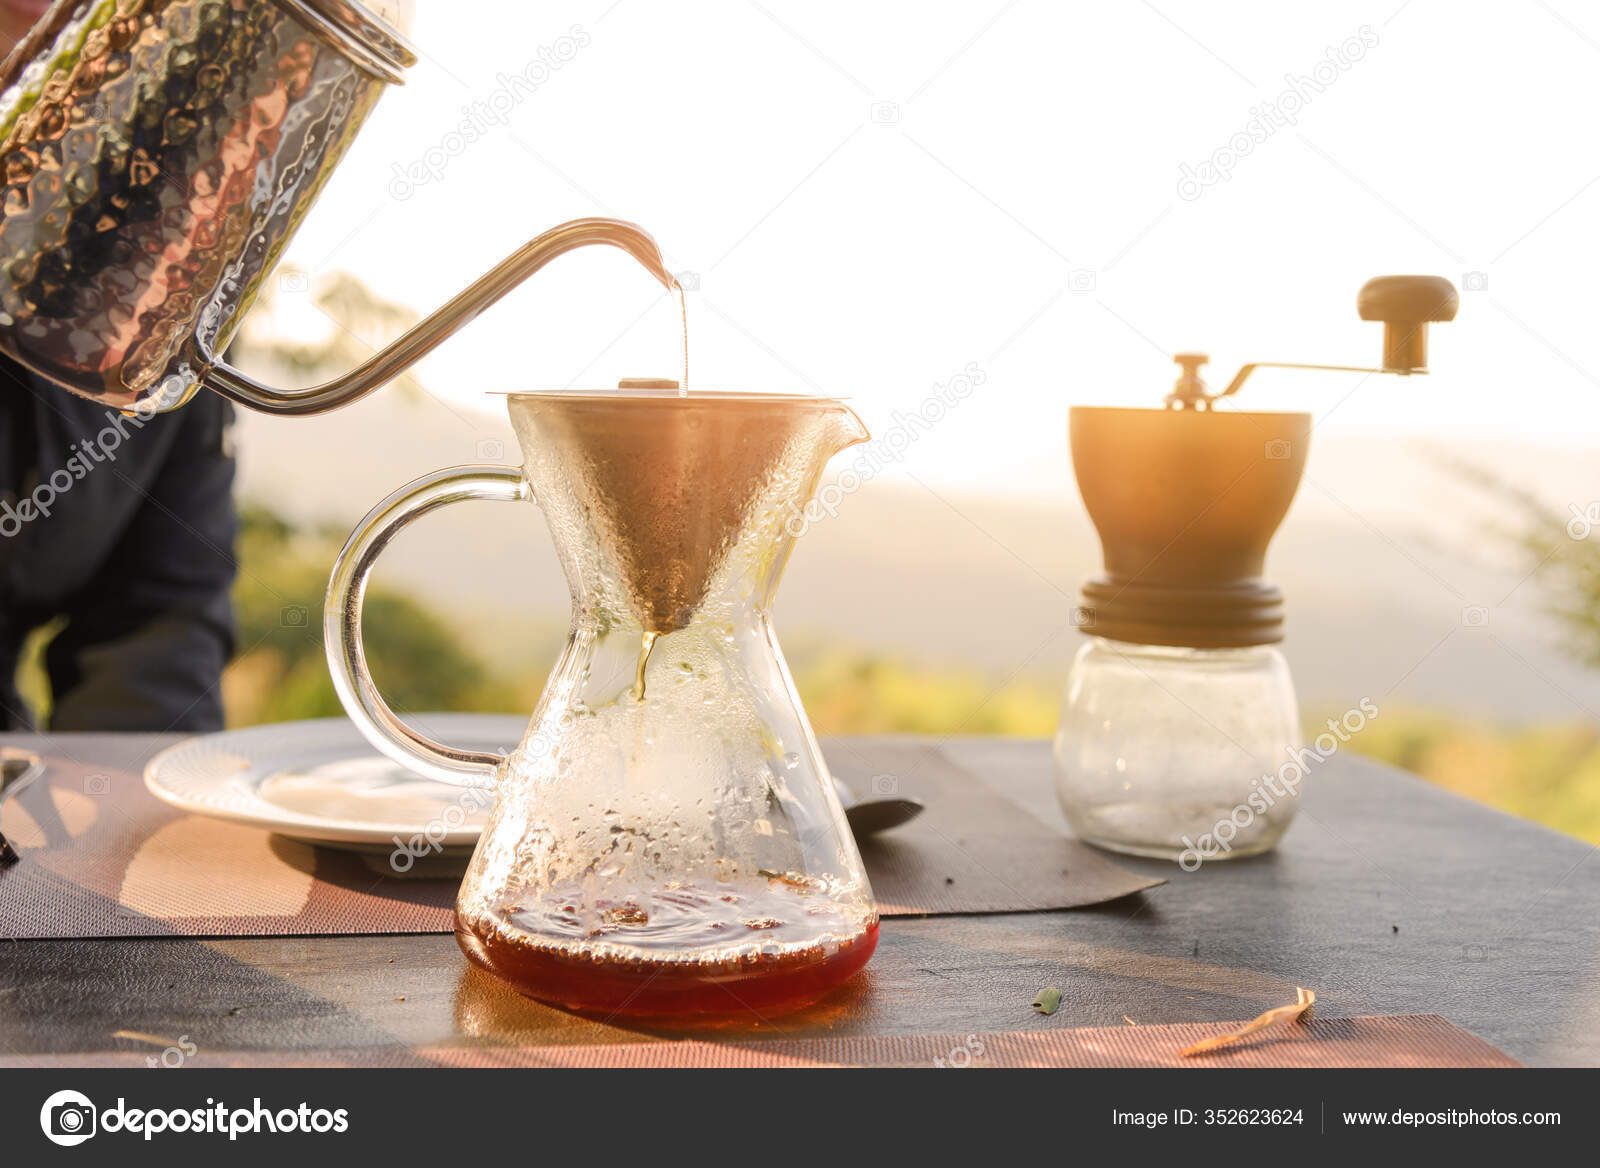 https://st3.depositphotos.com/4024535/35262/i/1600/depositphotos_352623624-stock-photo-hand-drip-coffee-making-pour.jpg